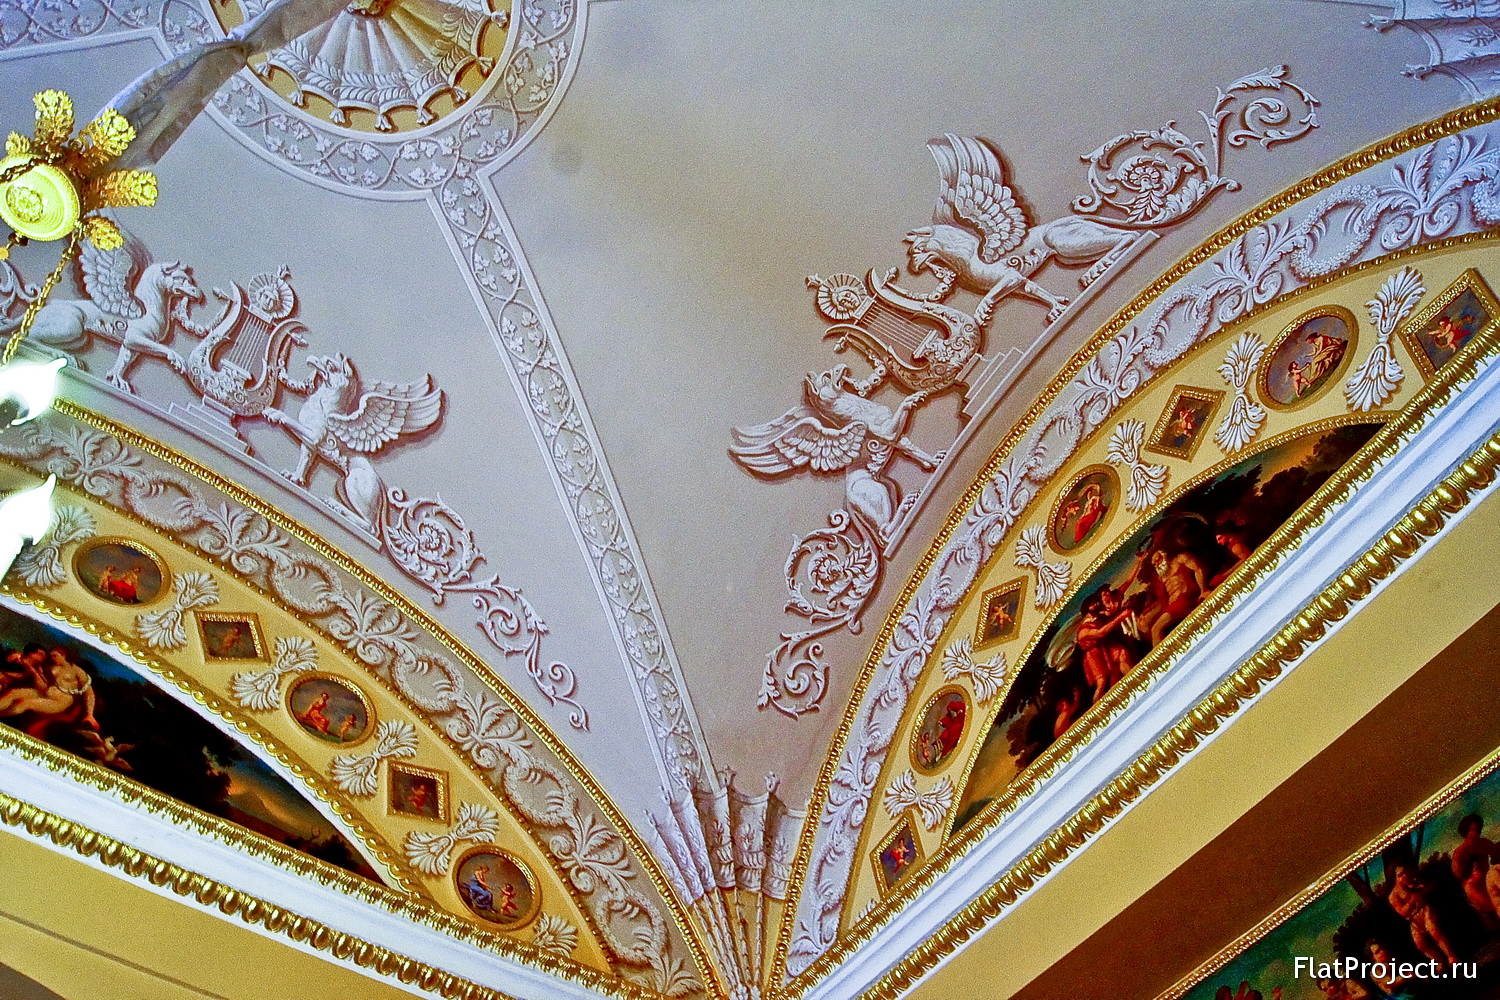 The Catherine Palace interiors – photo 27